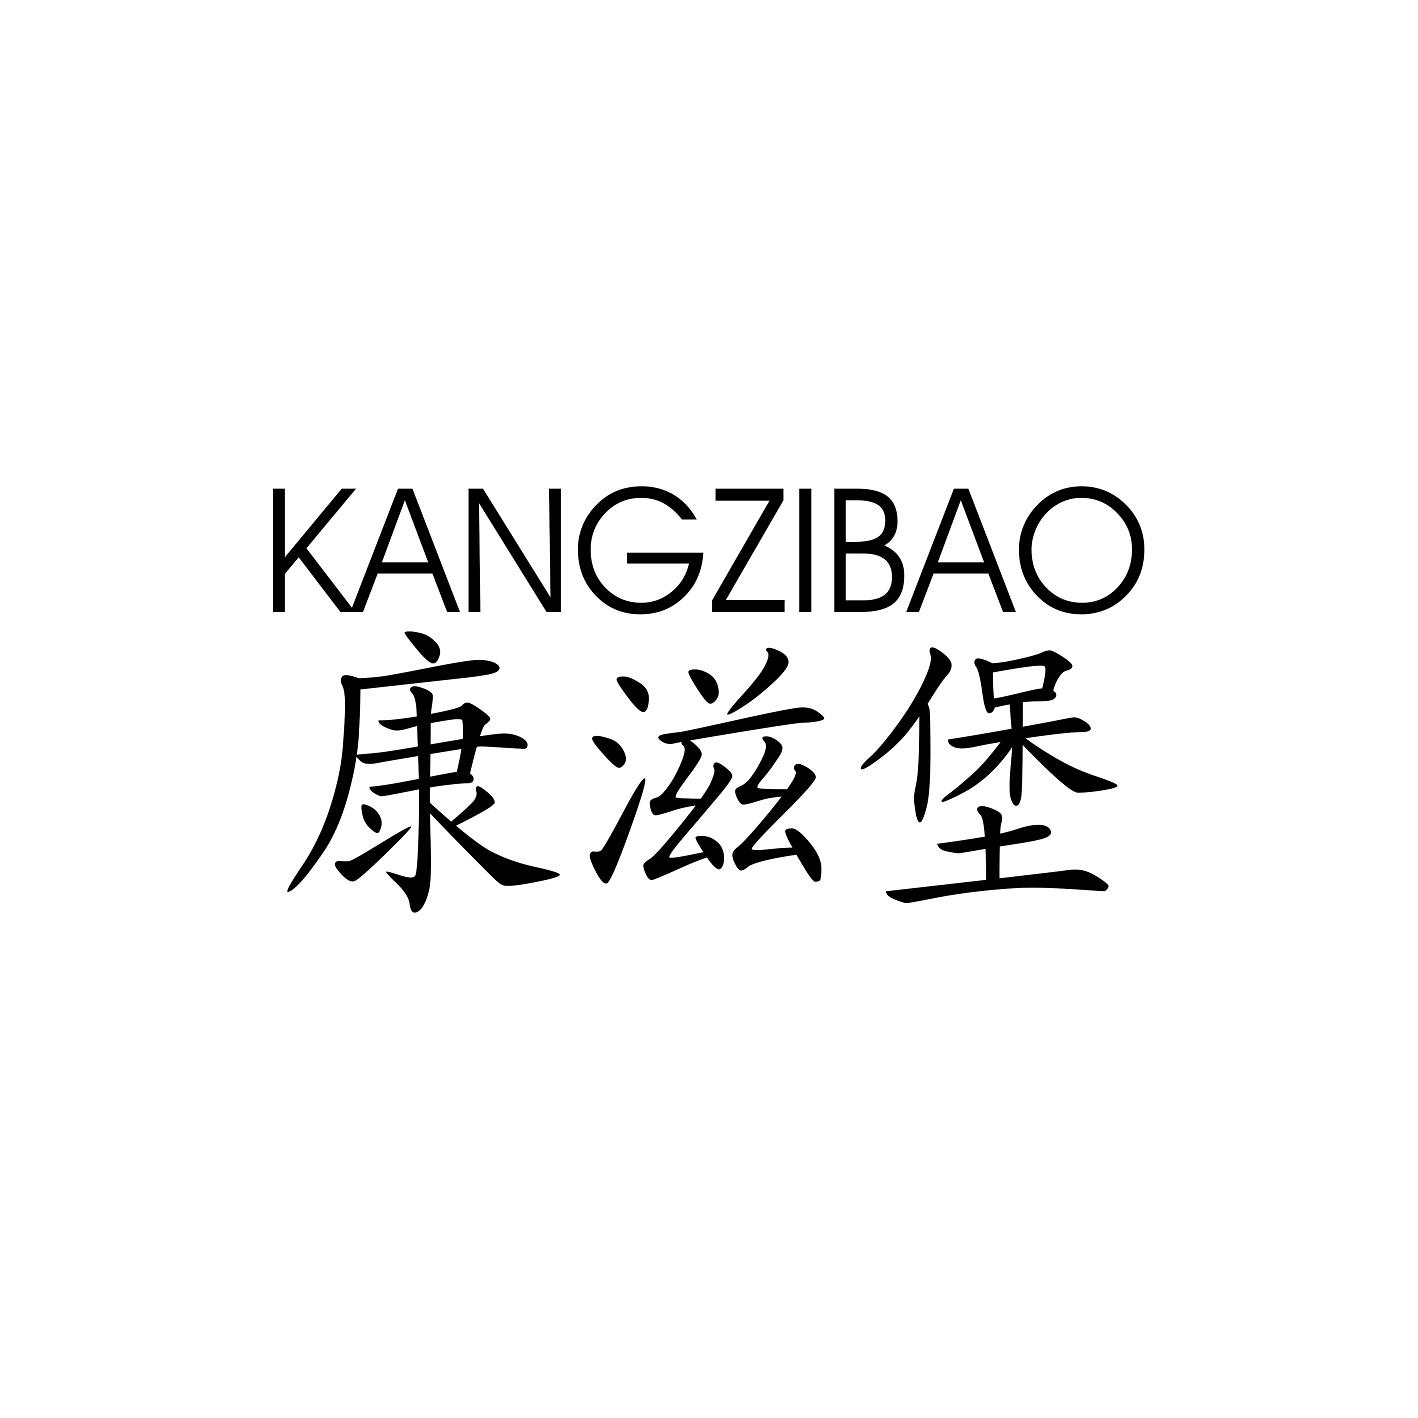 康滋堡 KANG ZI BAO